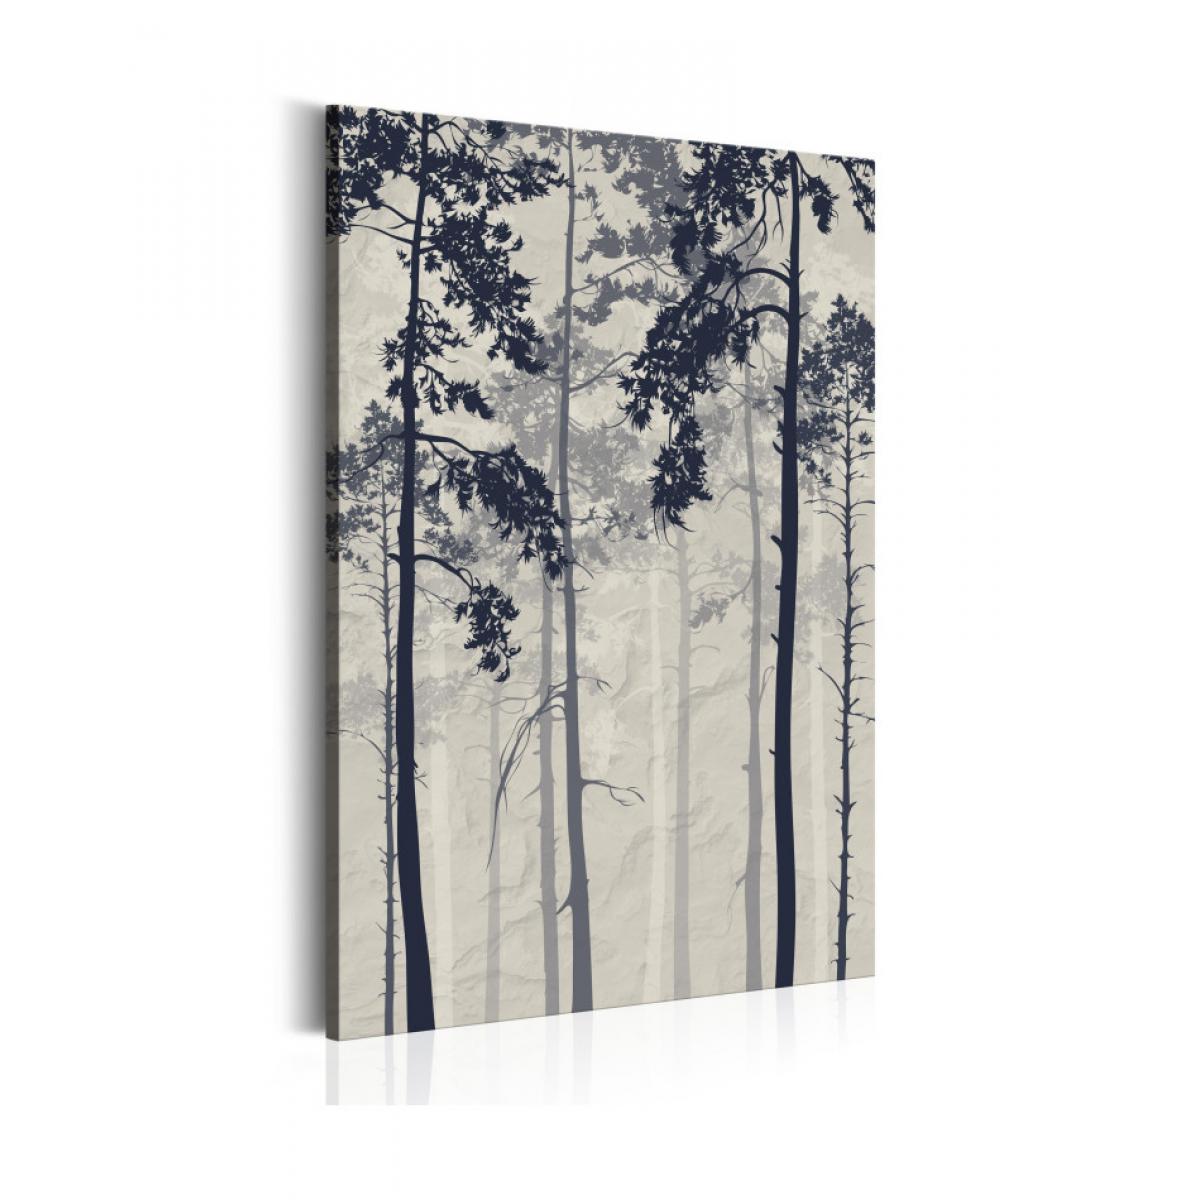 Artgeist - Tableau - Forest In Fog 40x60 - Tableaux, peintures